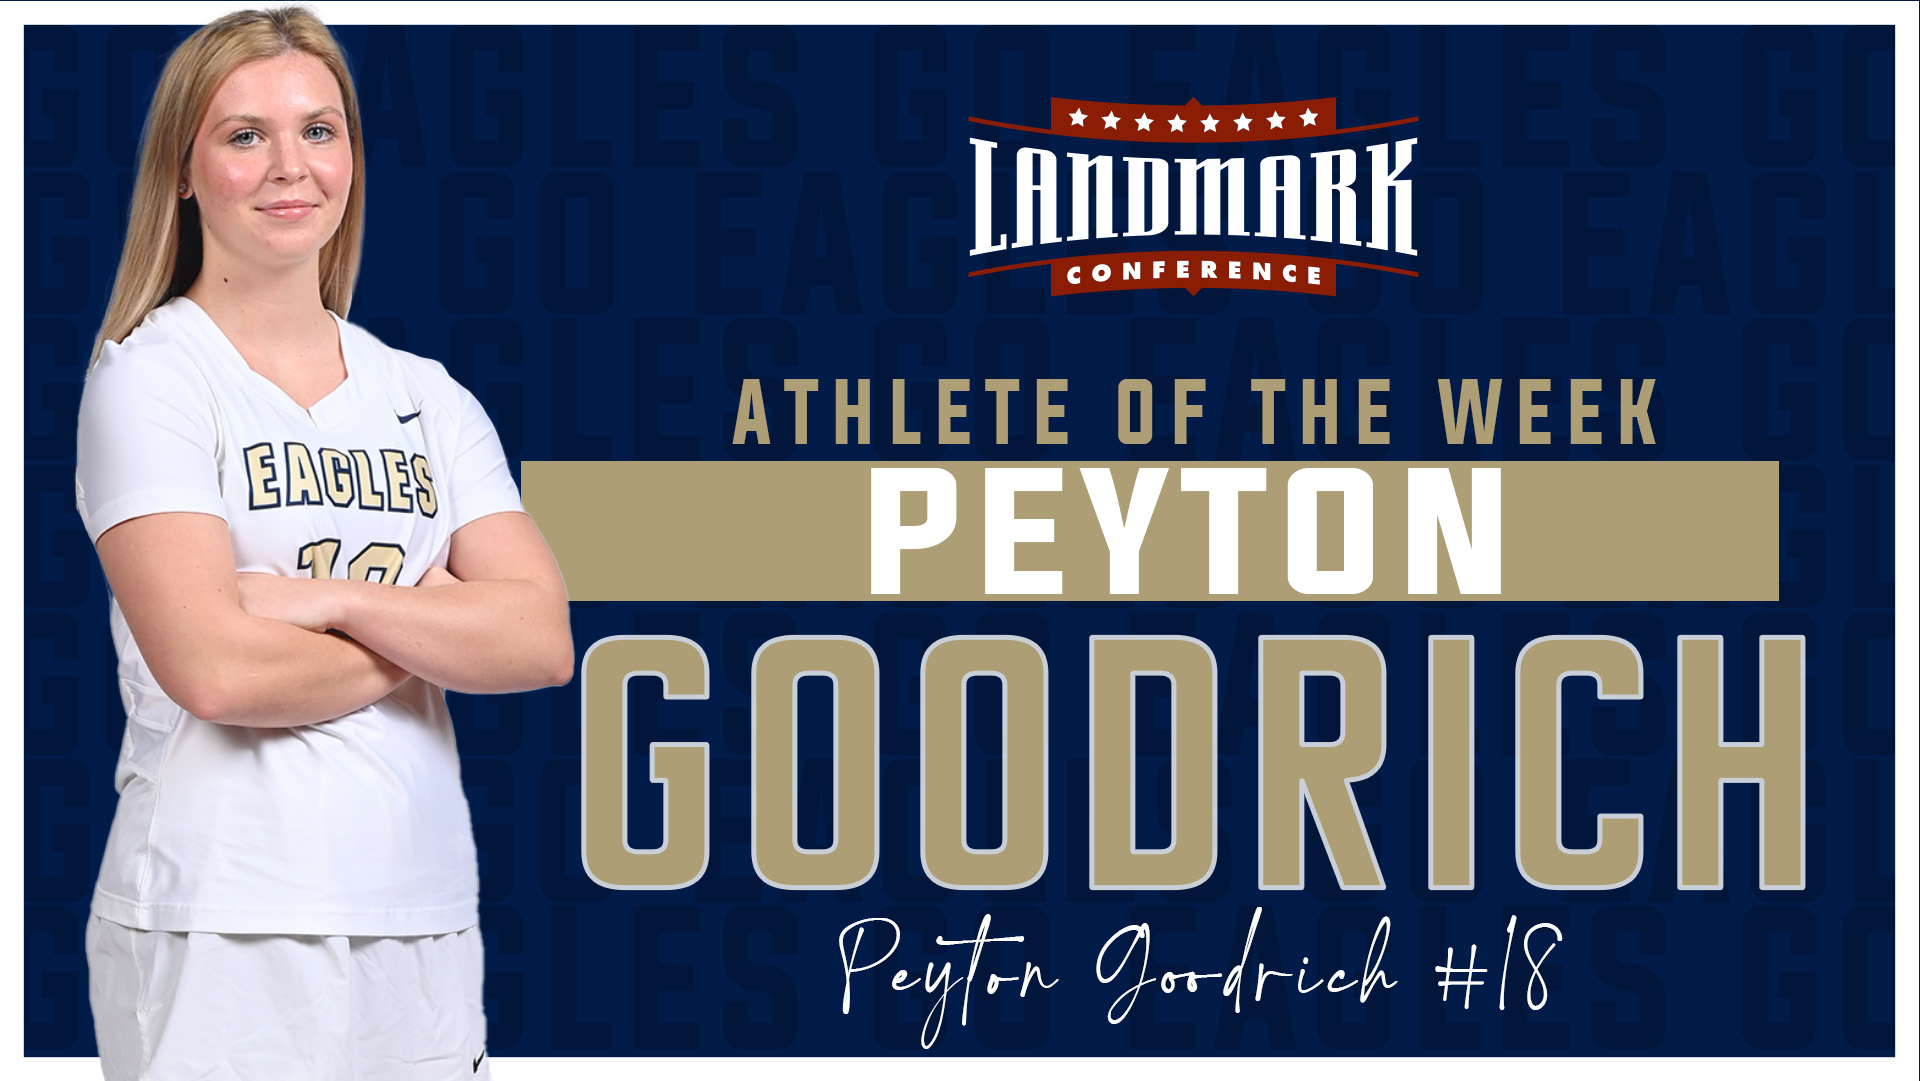 Goodrich Named Landmark Athlete of the Week